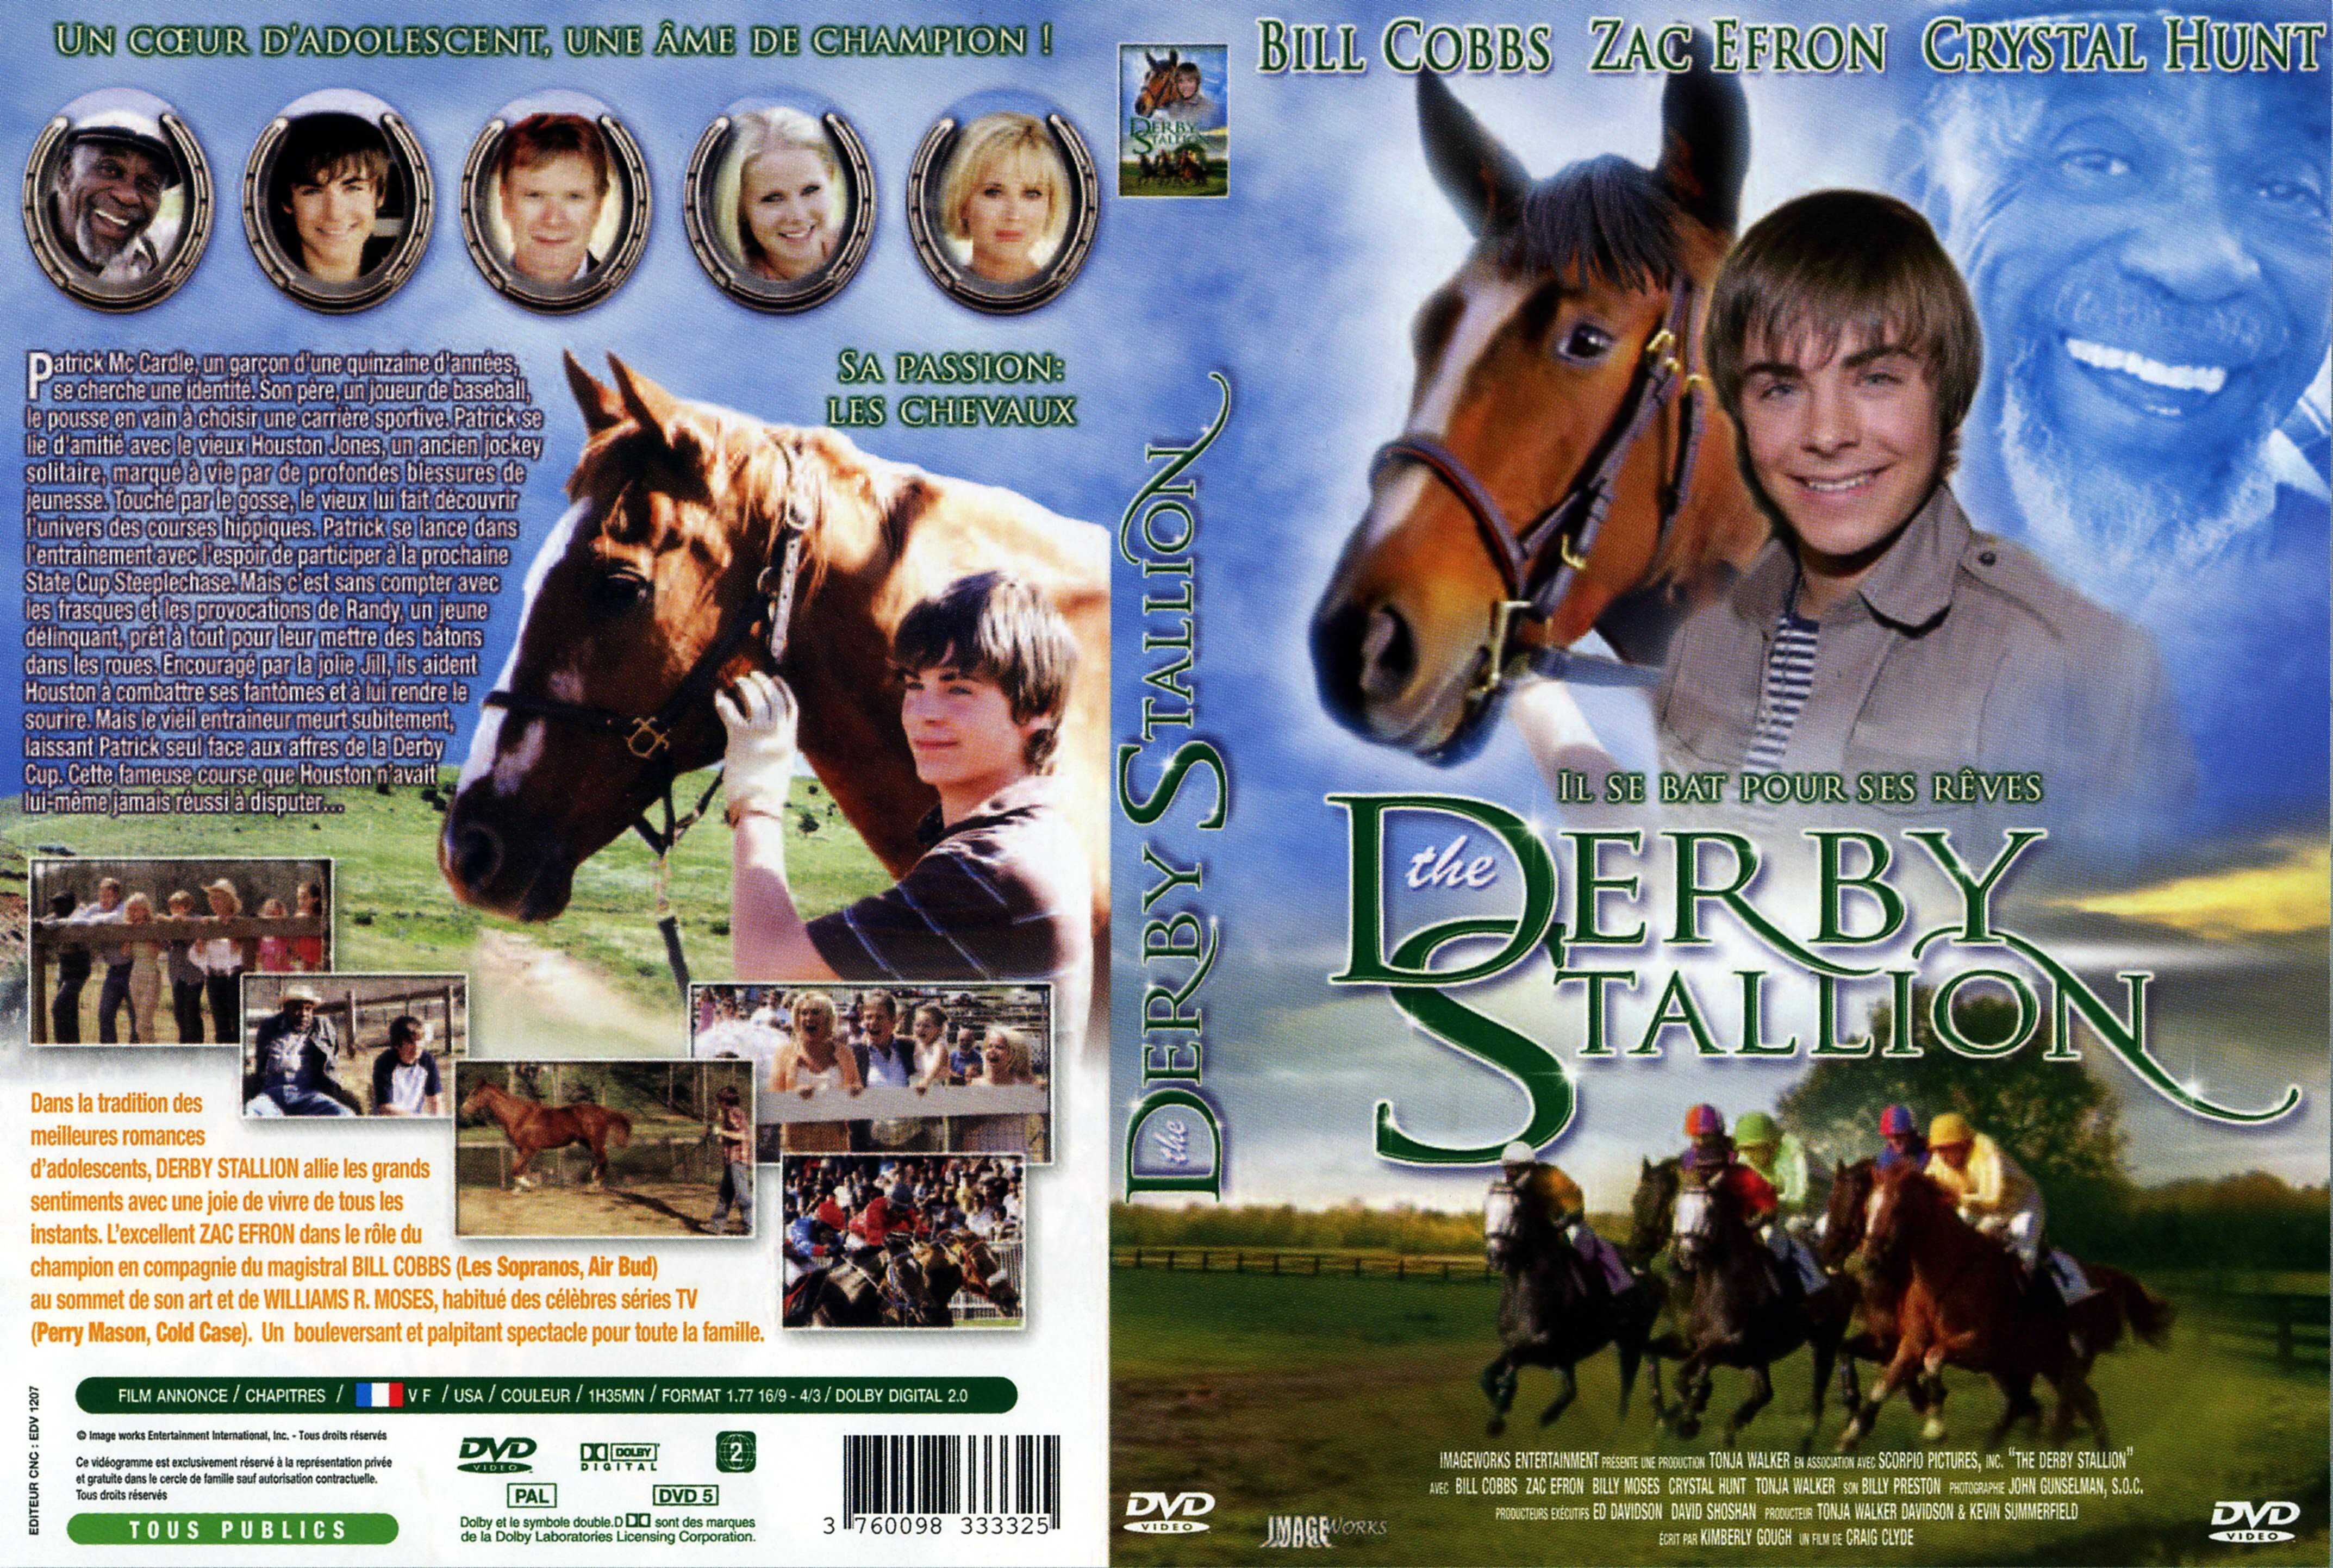 Jaquette DVD The derby stallion